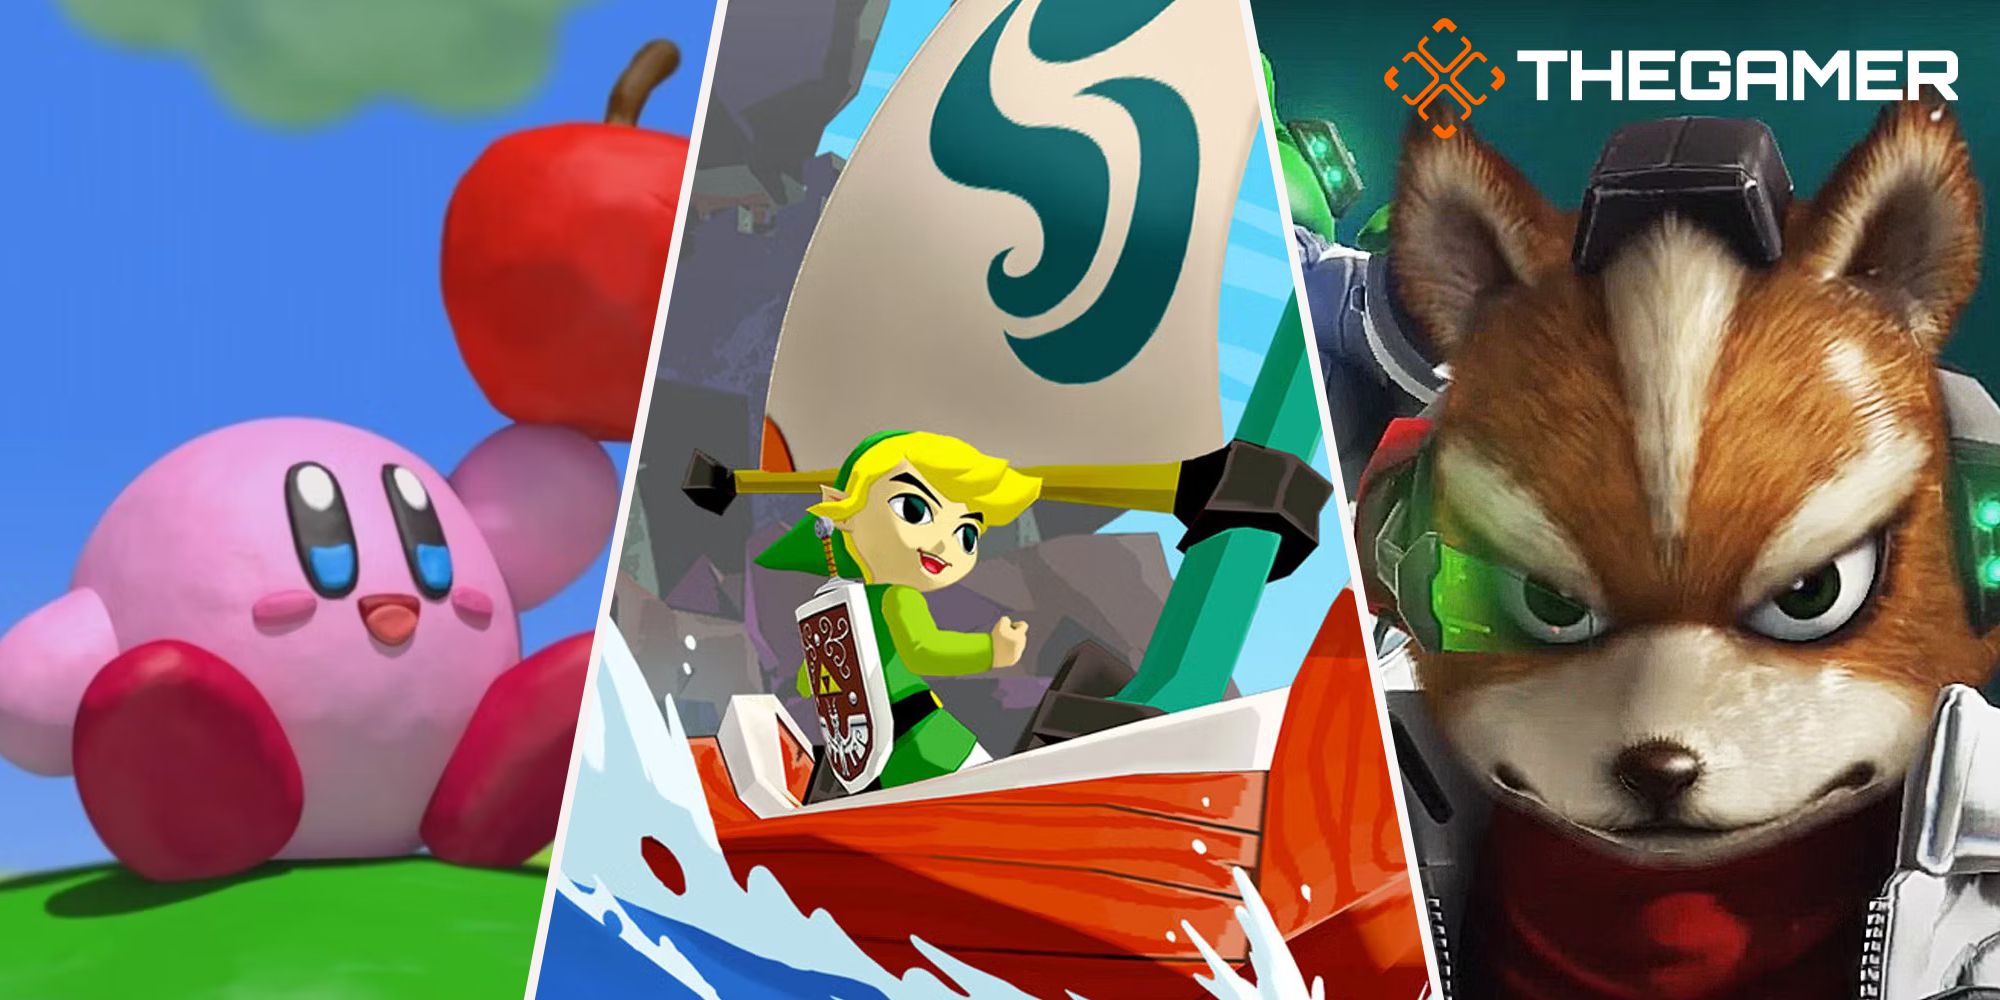 15 Wii U games that haven't found their way to Nintendo Switch